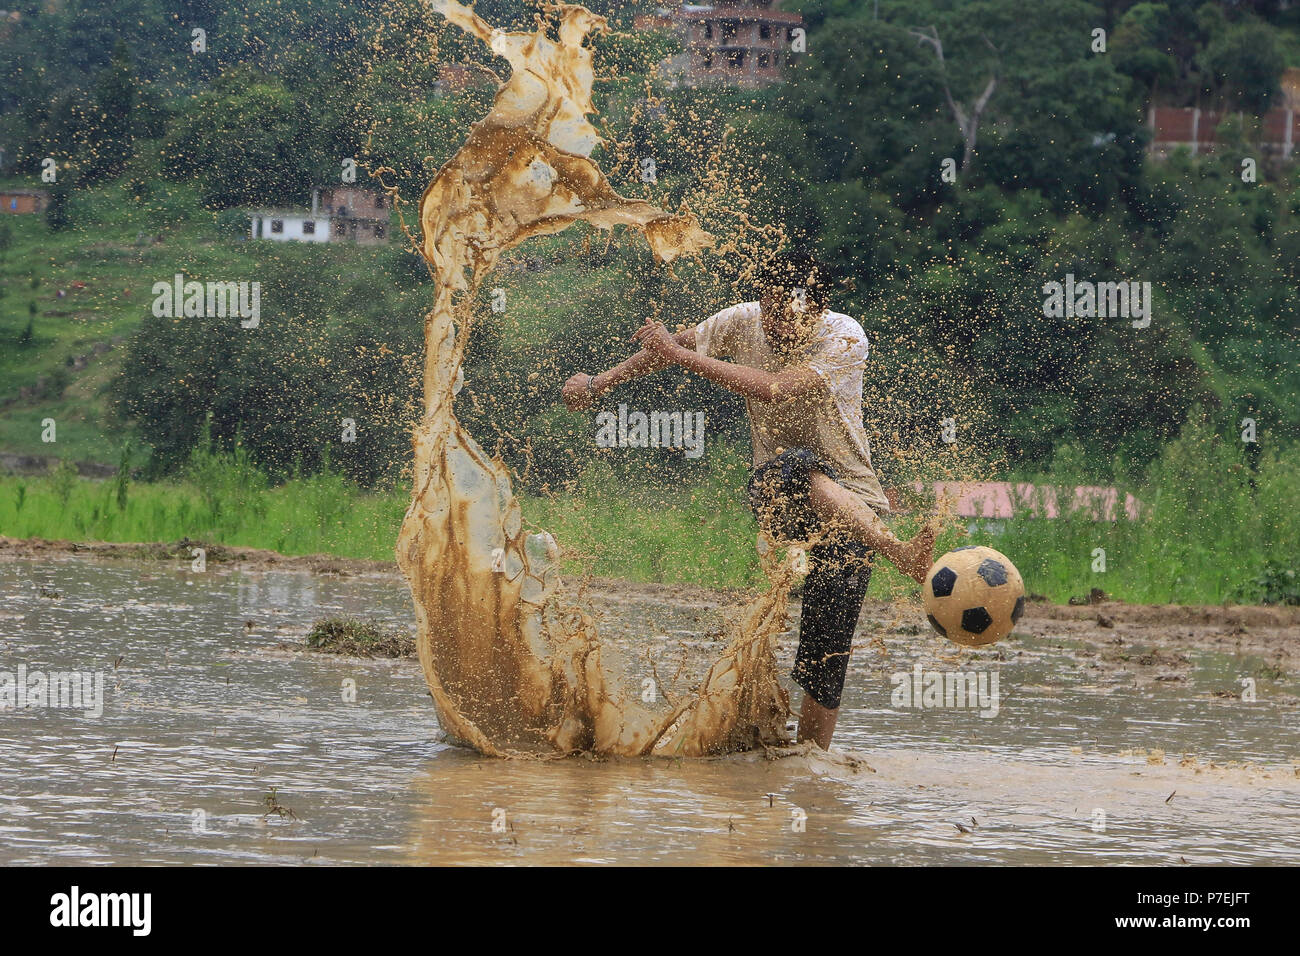 A man playing a football in a muddy field during the National Paddy Day outskirt of Kathmandu, Nepal. Sarita Khadka/Alamy Live News Stock Photo